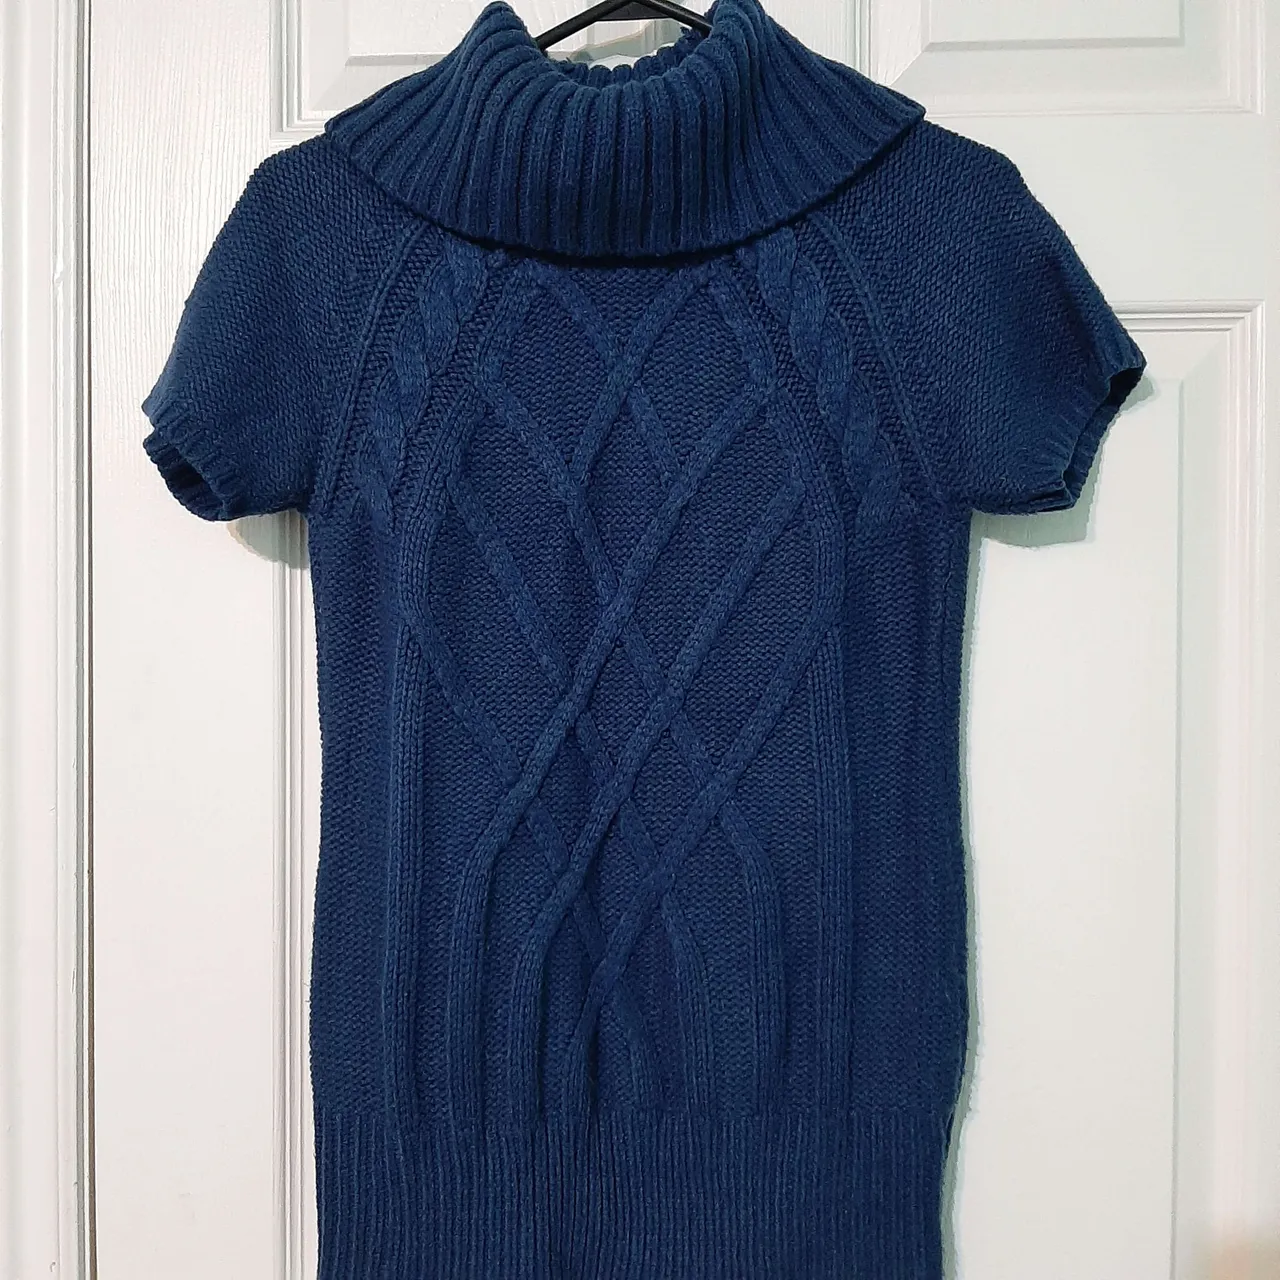 Cute Blue Knit Sweater photo 1